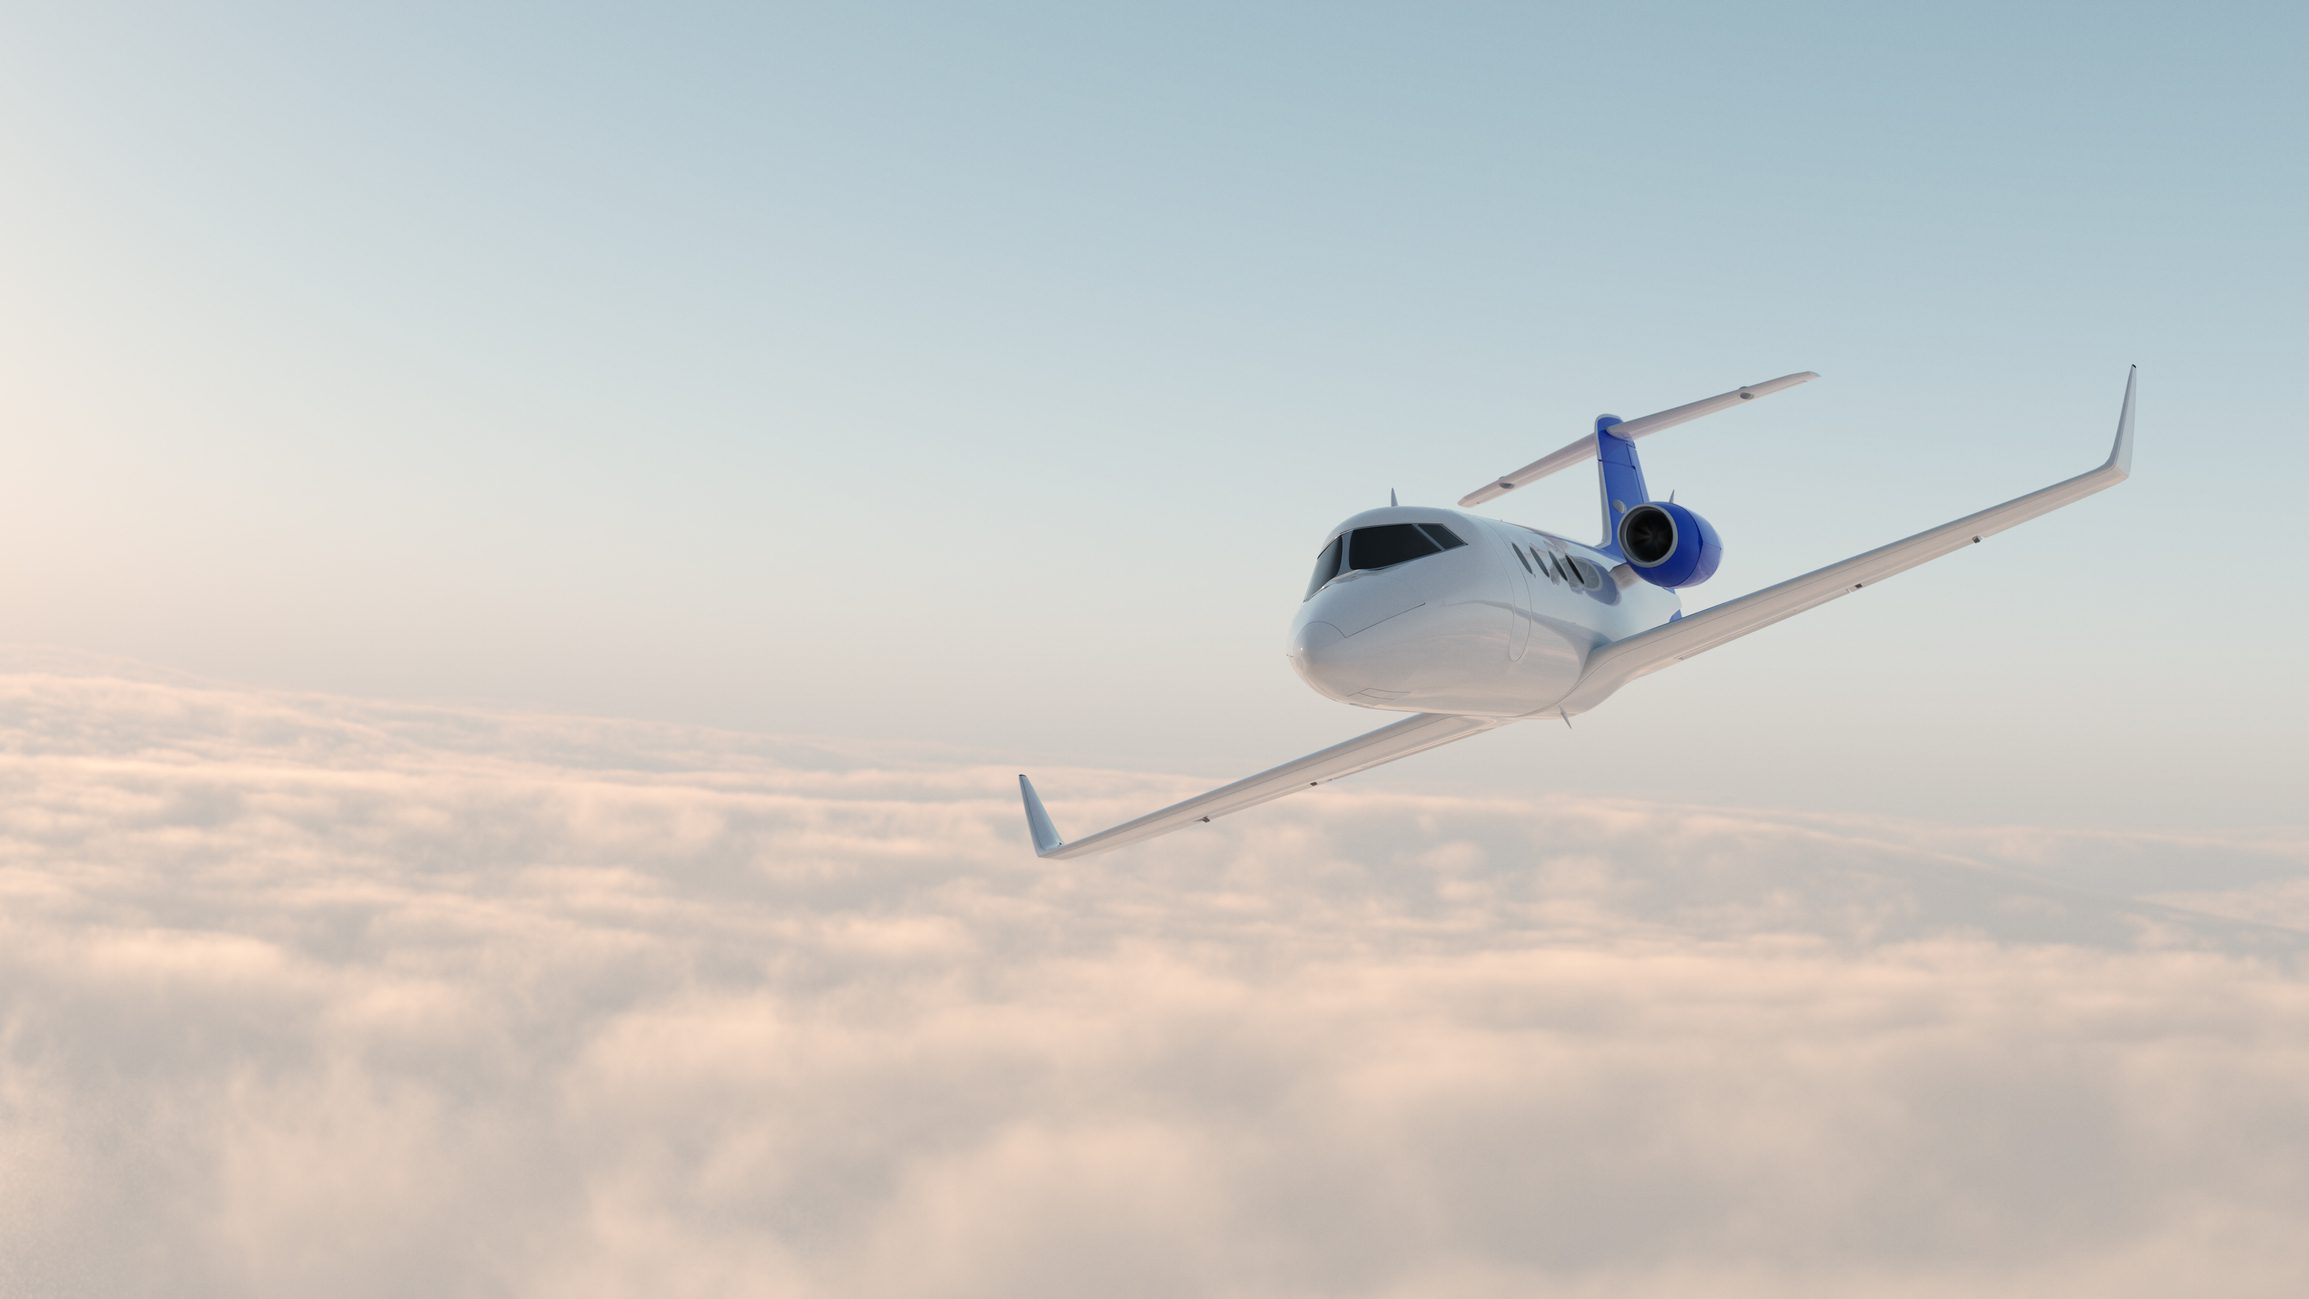 Corporate jet in the sky